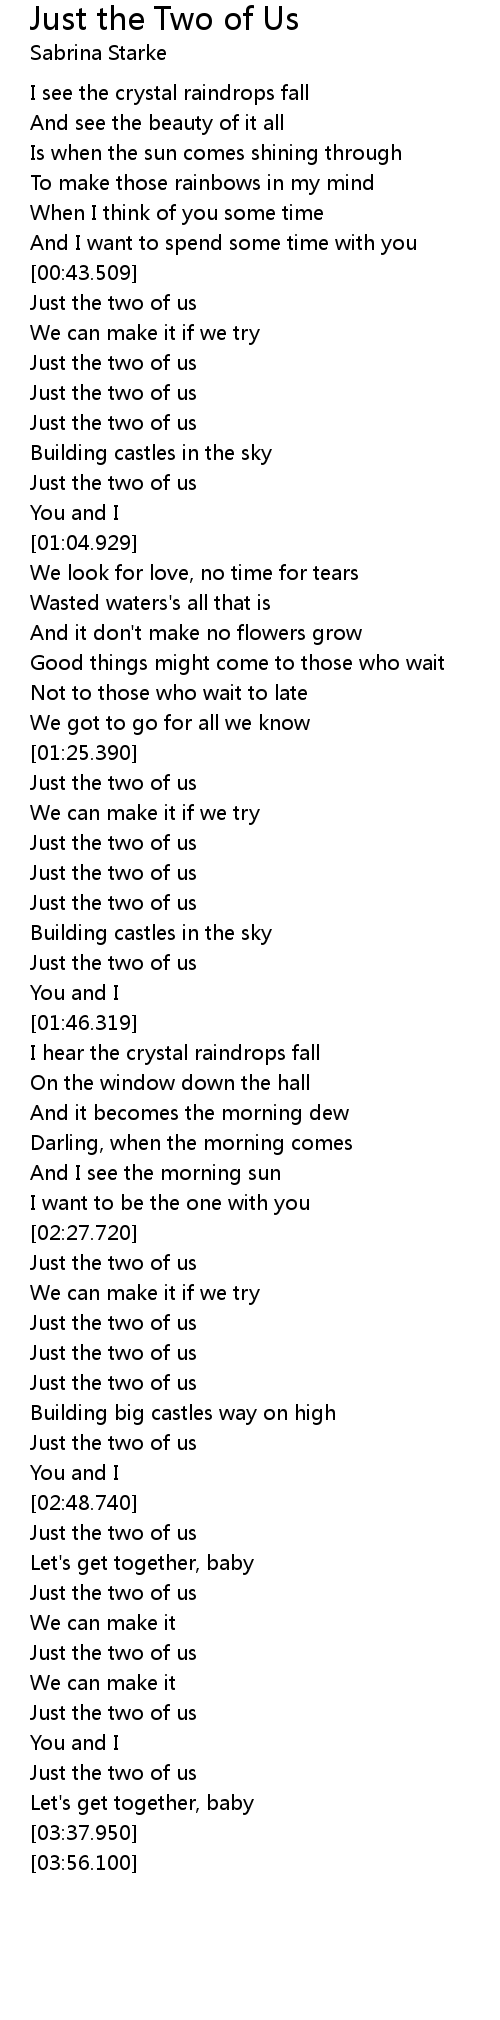 Just the Two of Us Lyrics - Follow Lyrics